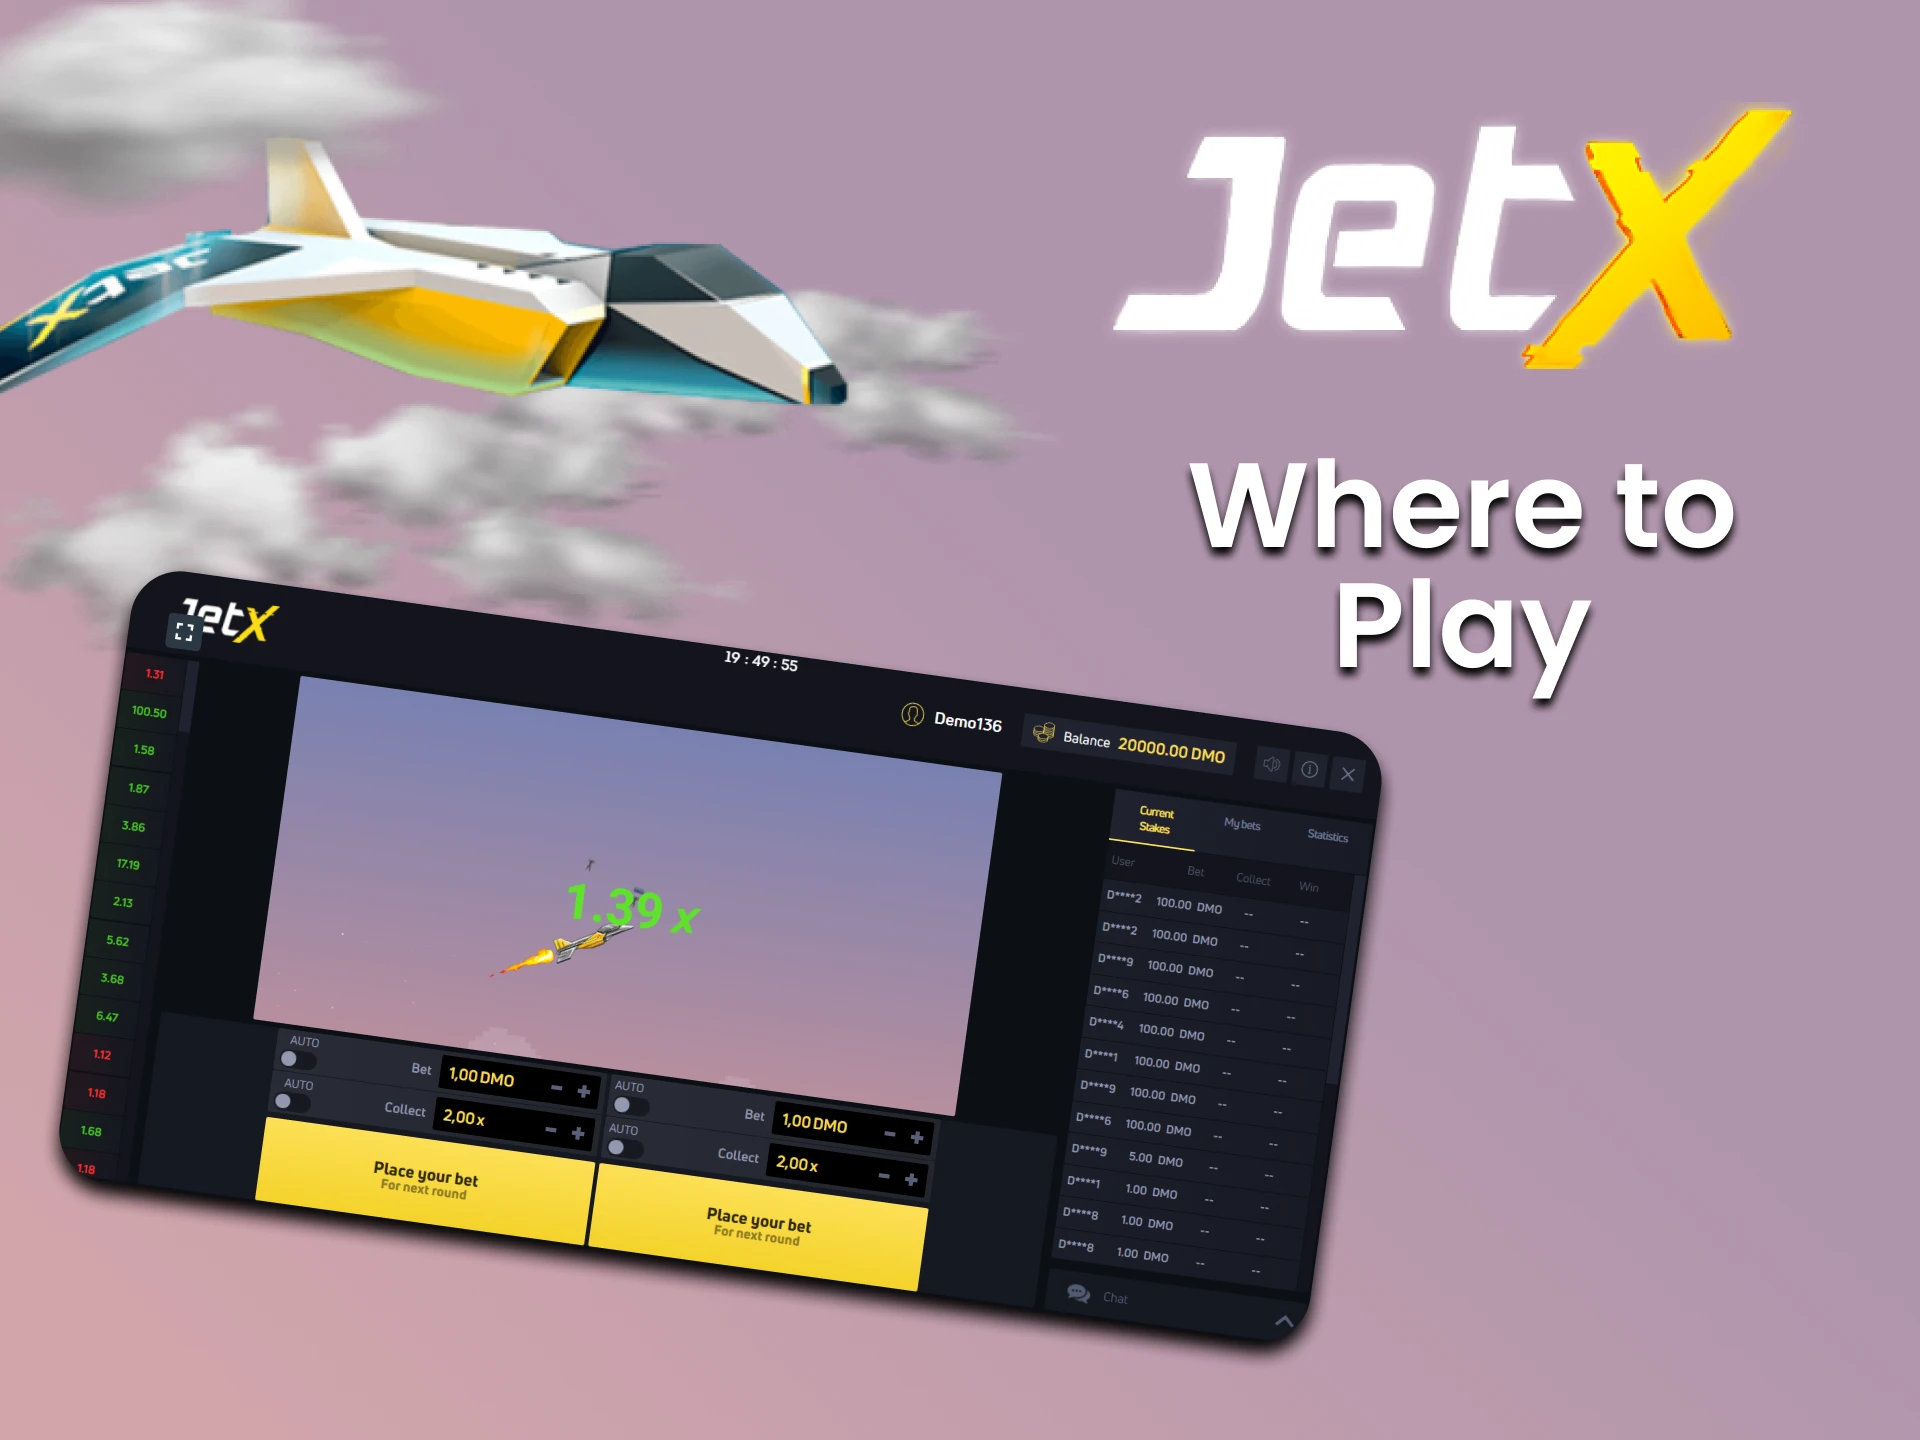 Choose a convenient platform for playing JetX.